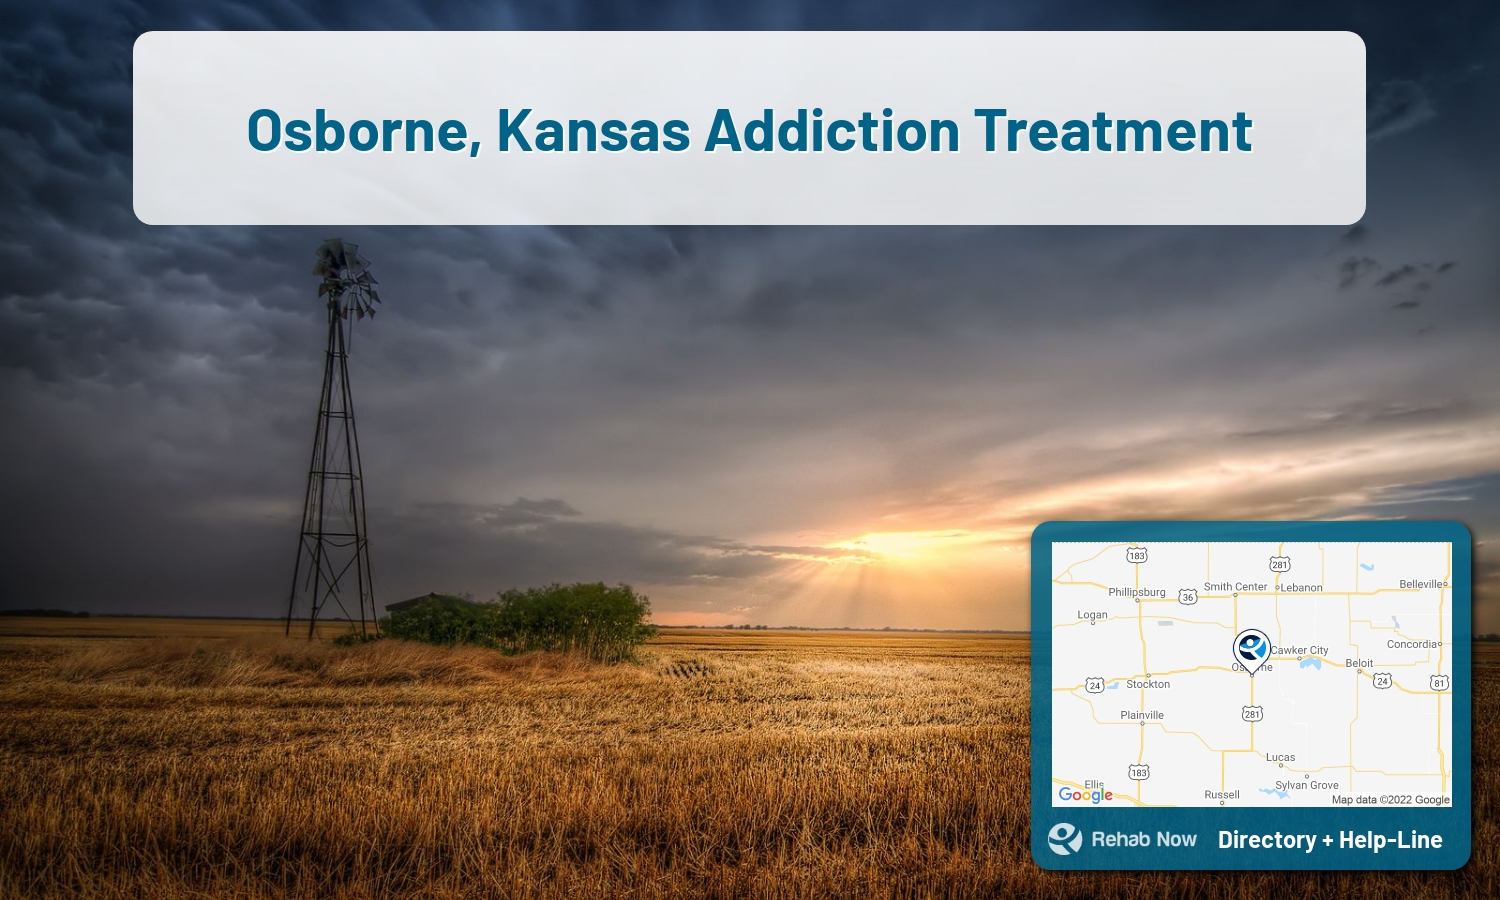 Osborne, KS Treatment Centers. Find drug rehab in Osborne, Kansas, or detox and treatment programs. Get the right help now!